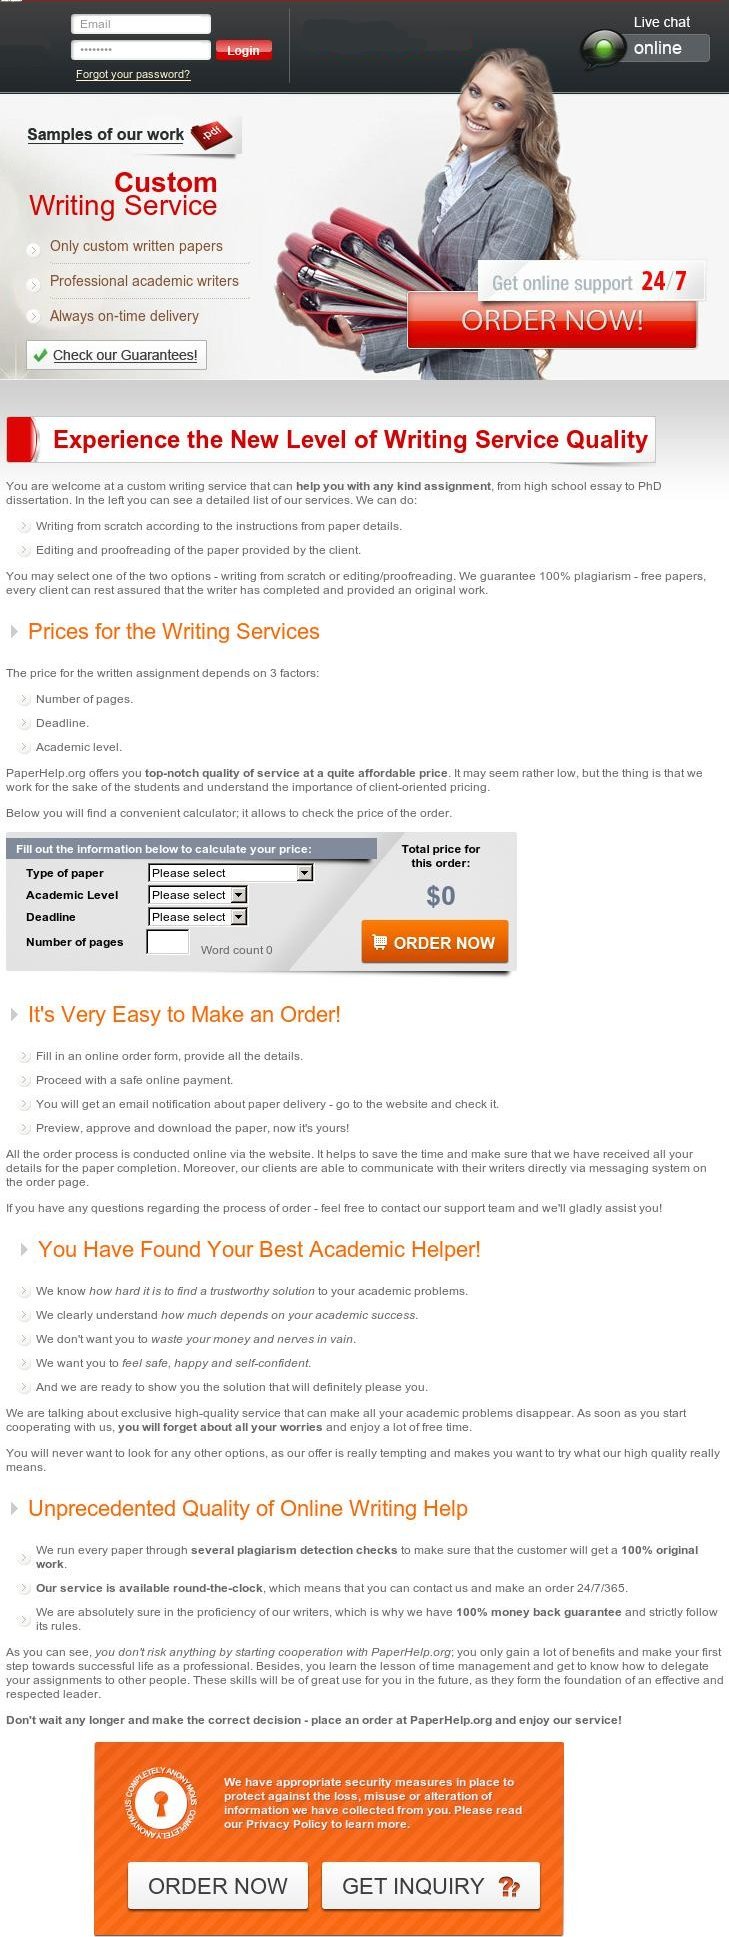 (follow paper details) essay writer online